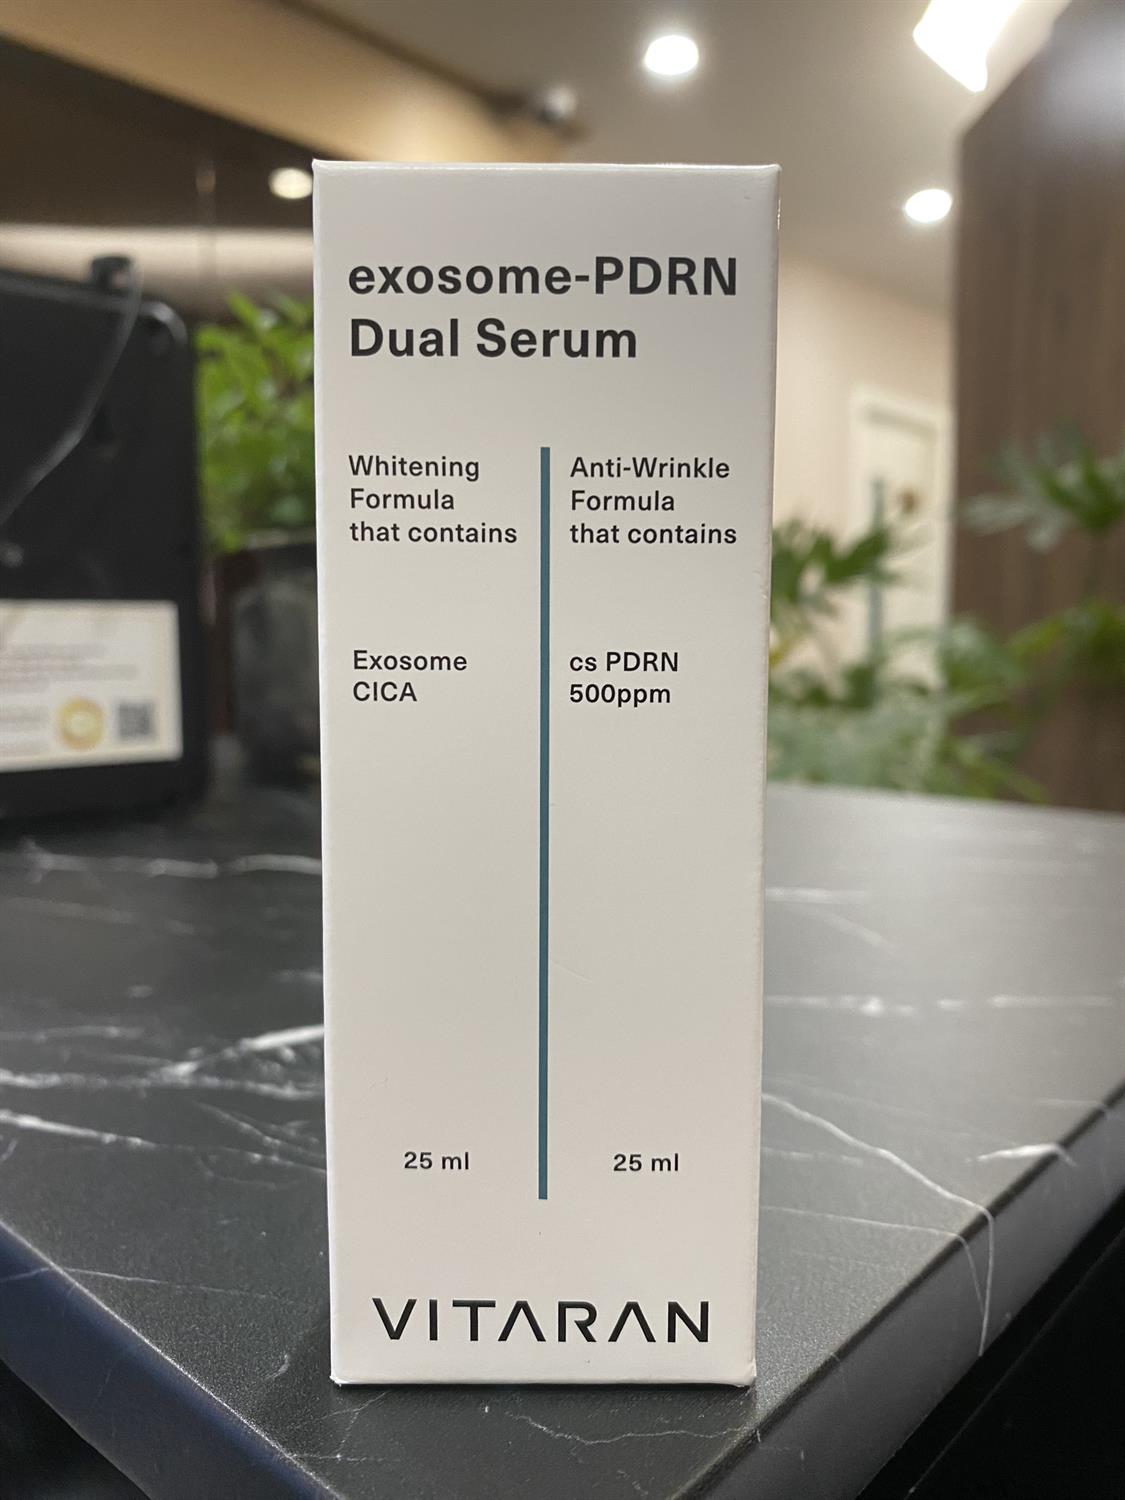 Exosome- PDRN Dual Serum